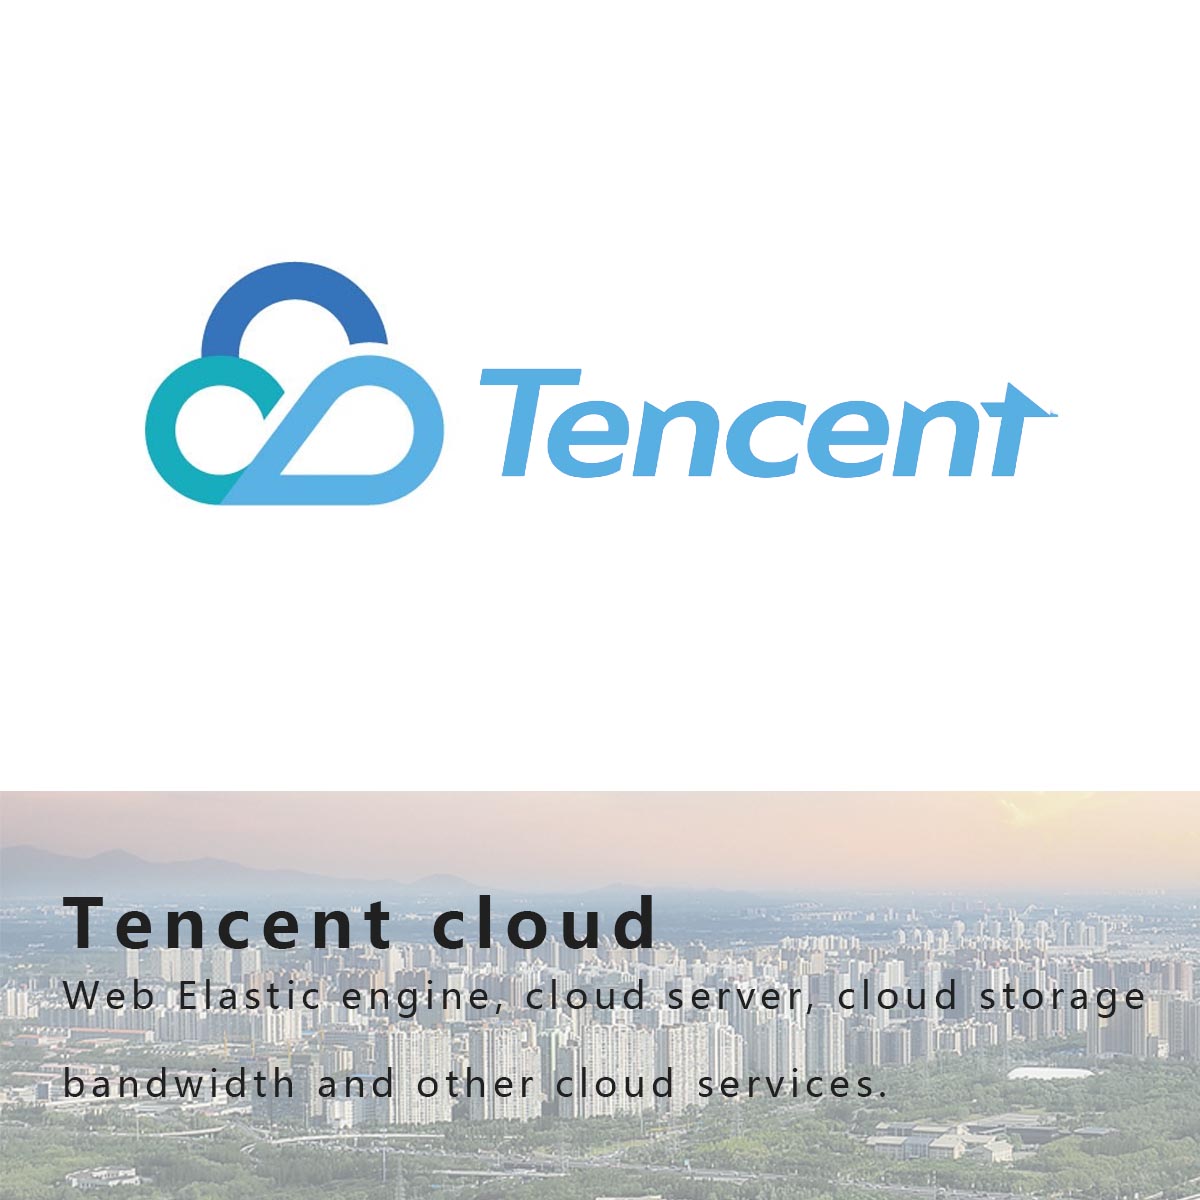 Tencent cloud